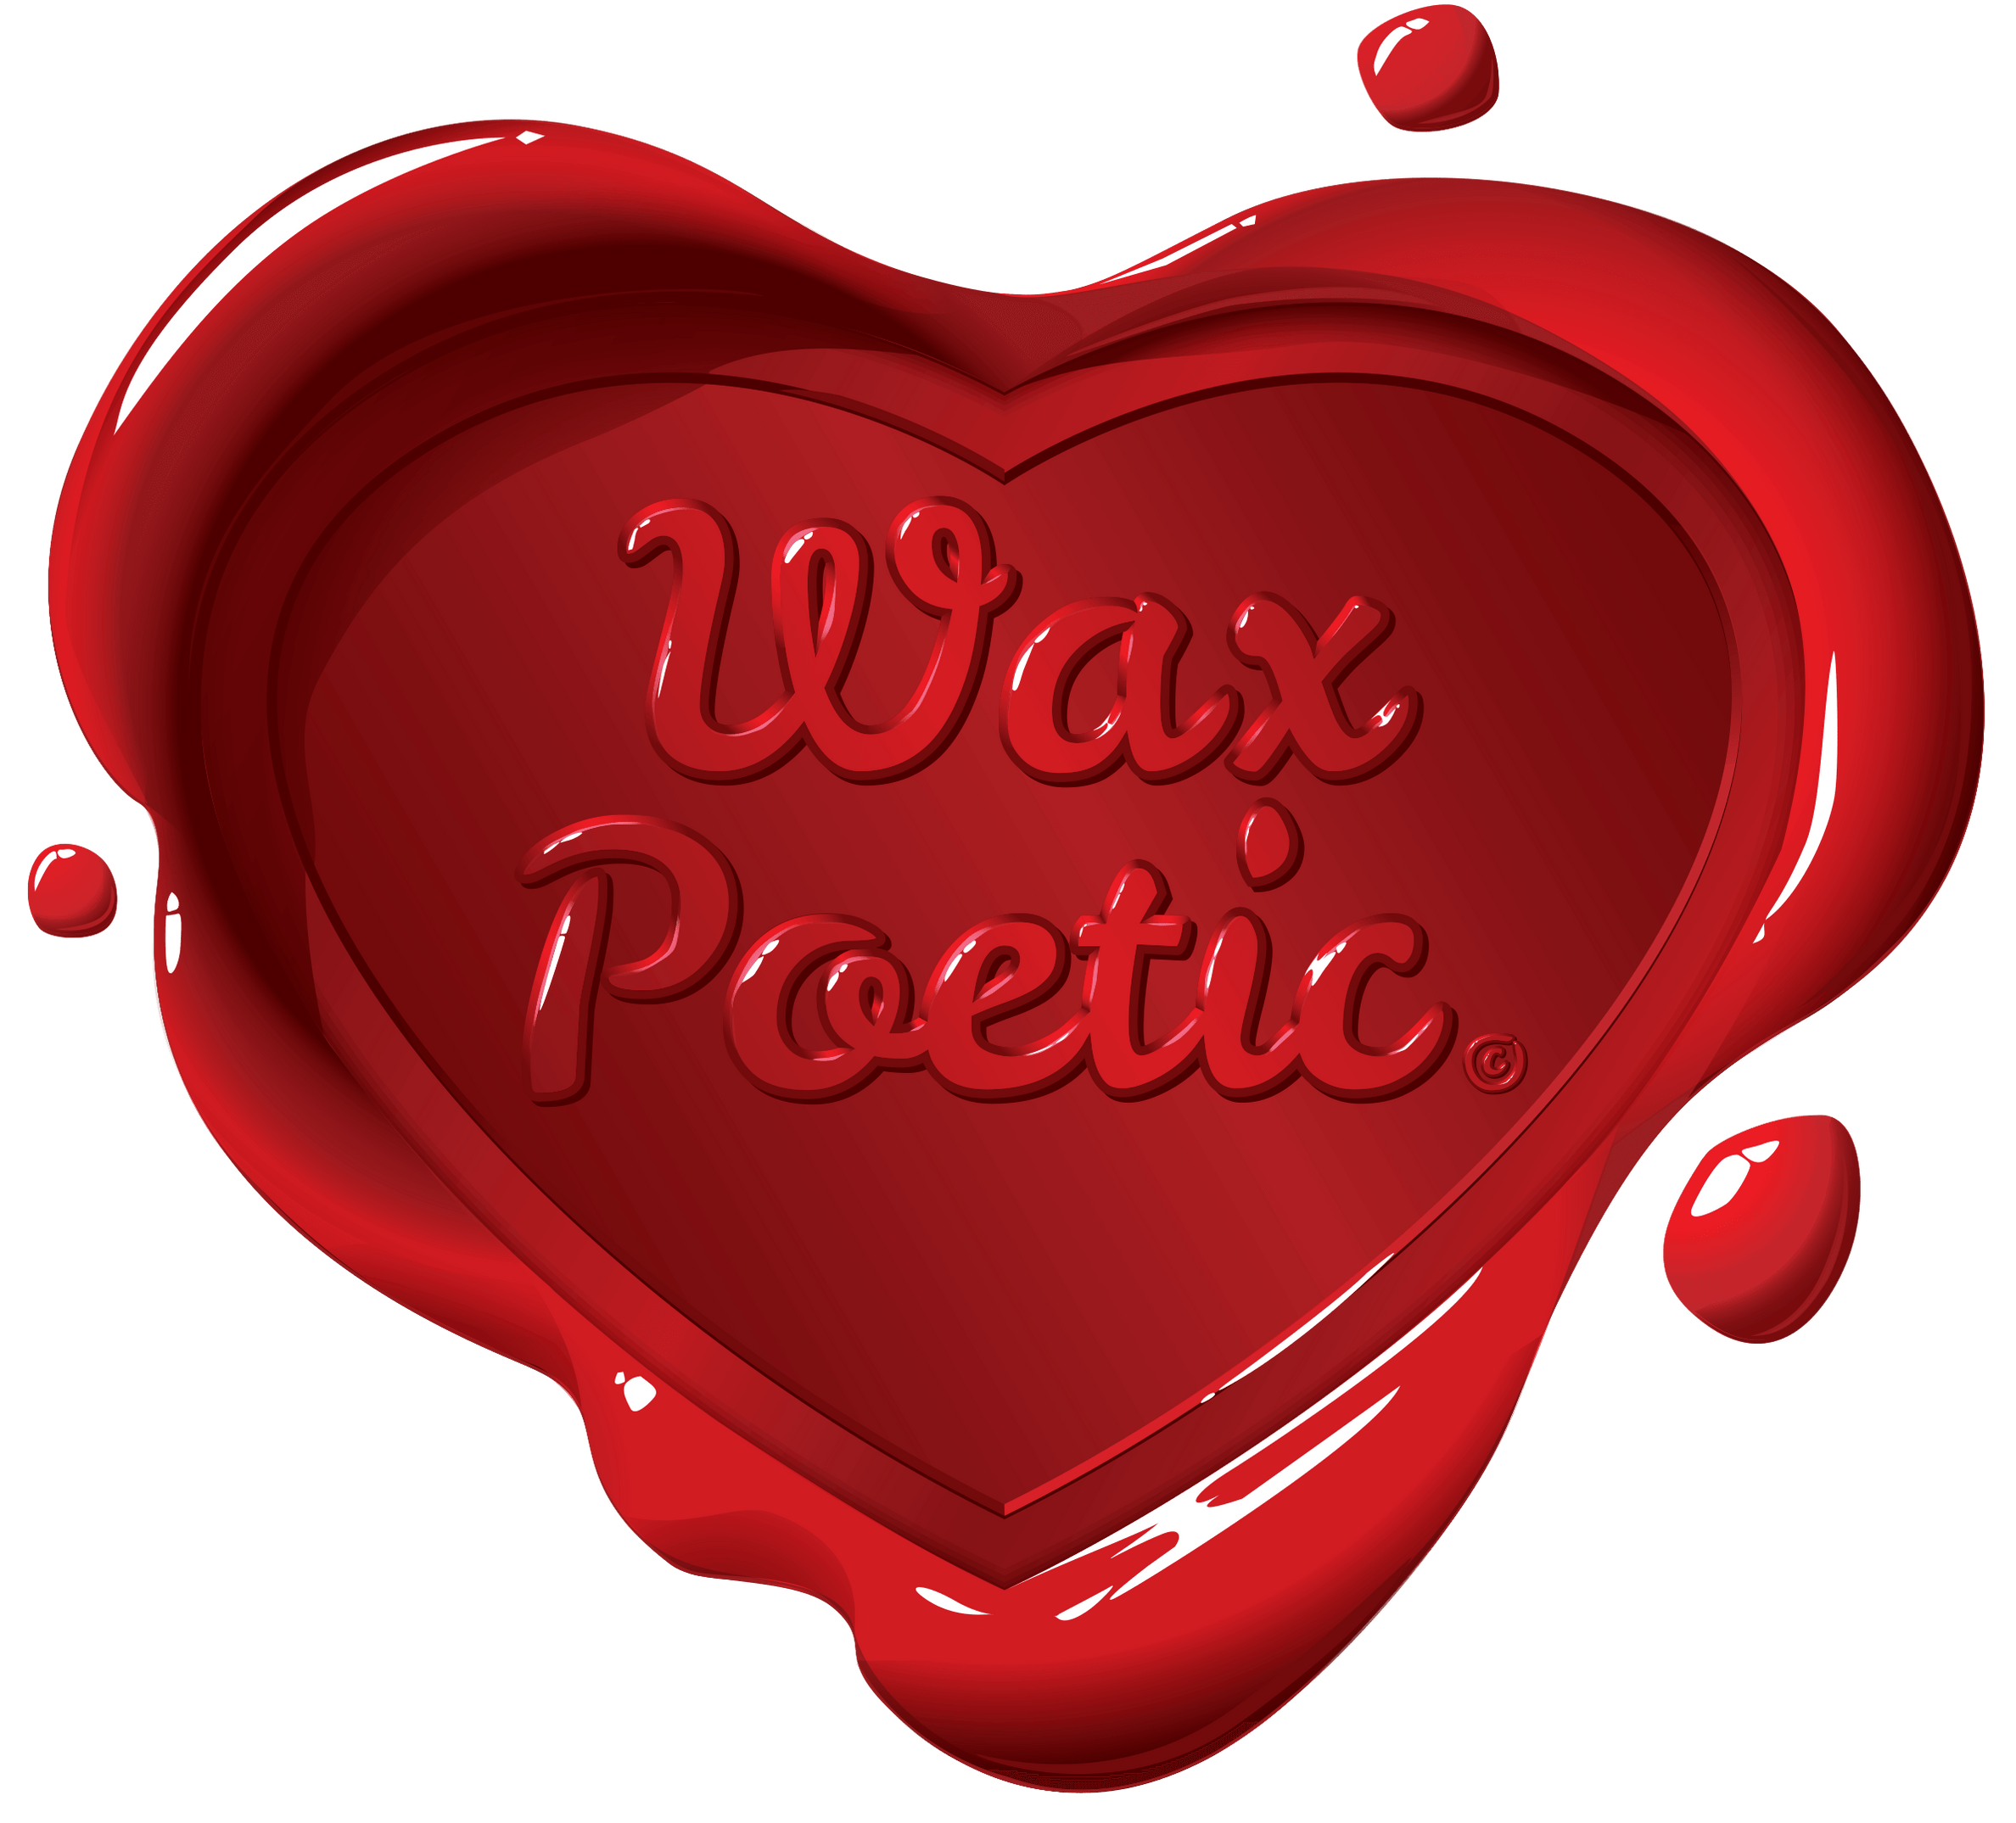 wax poetic definition